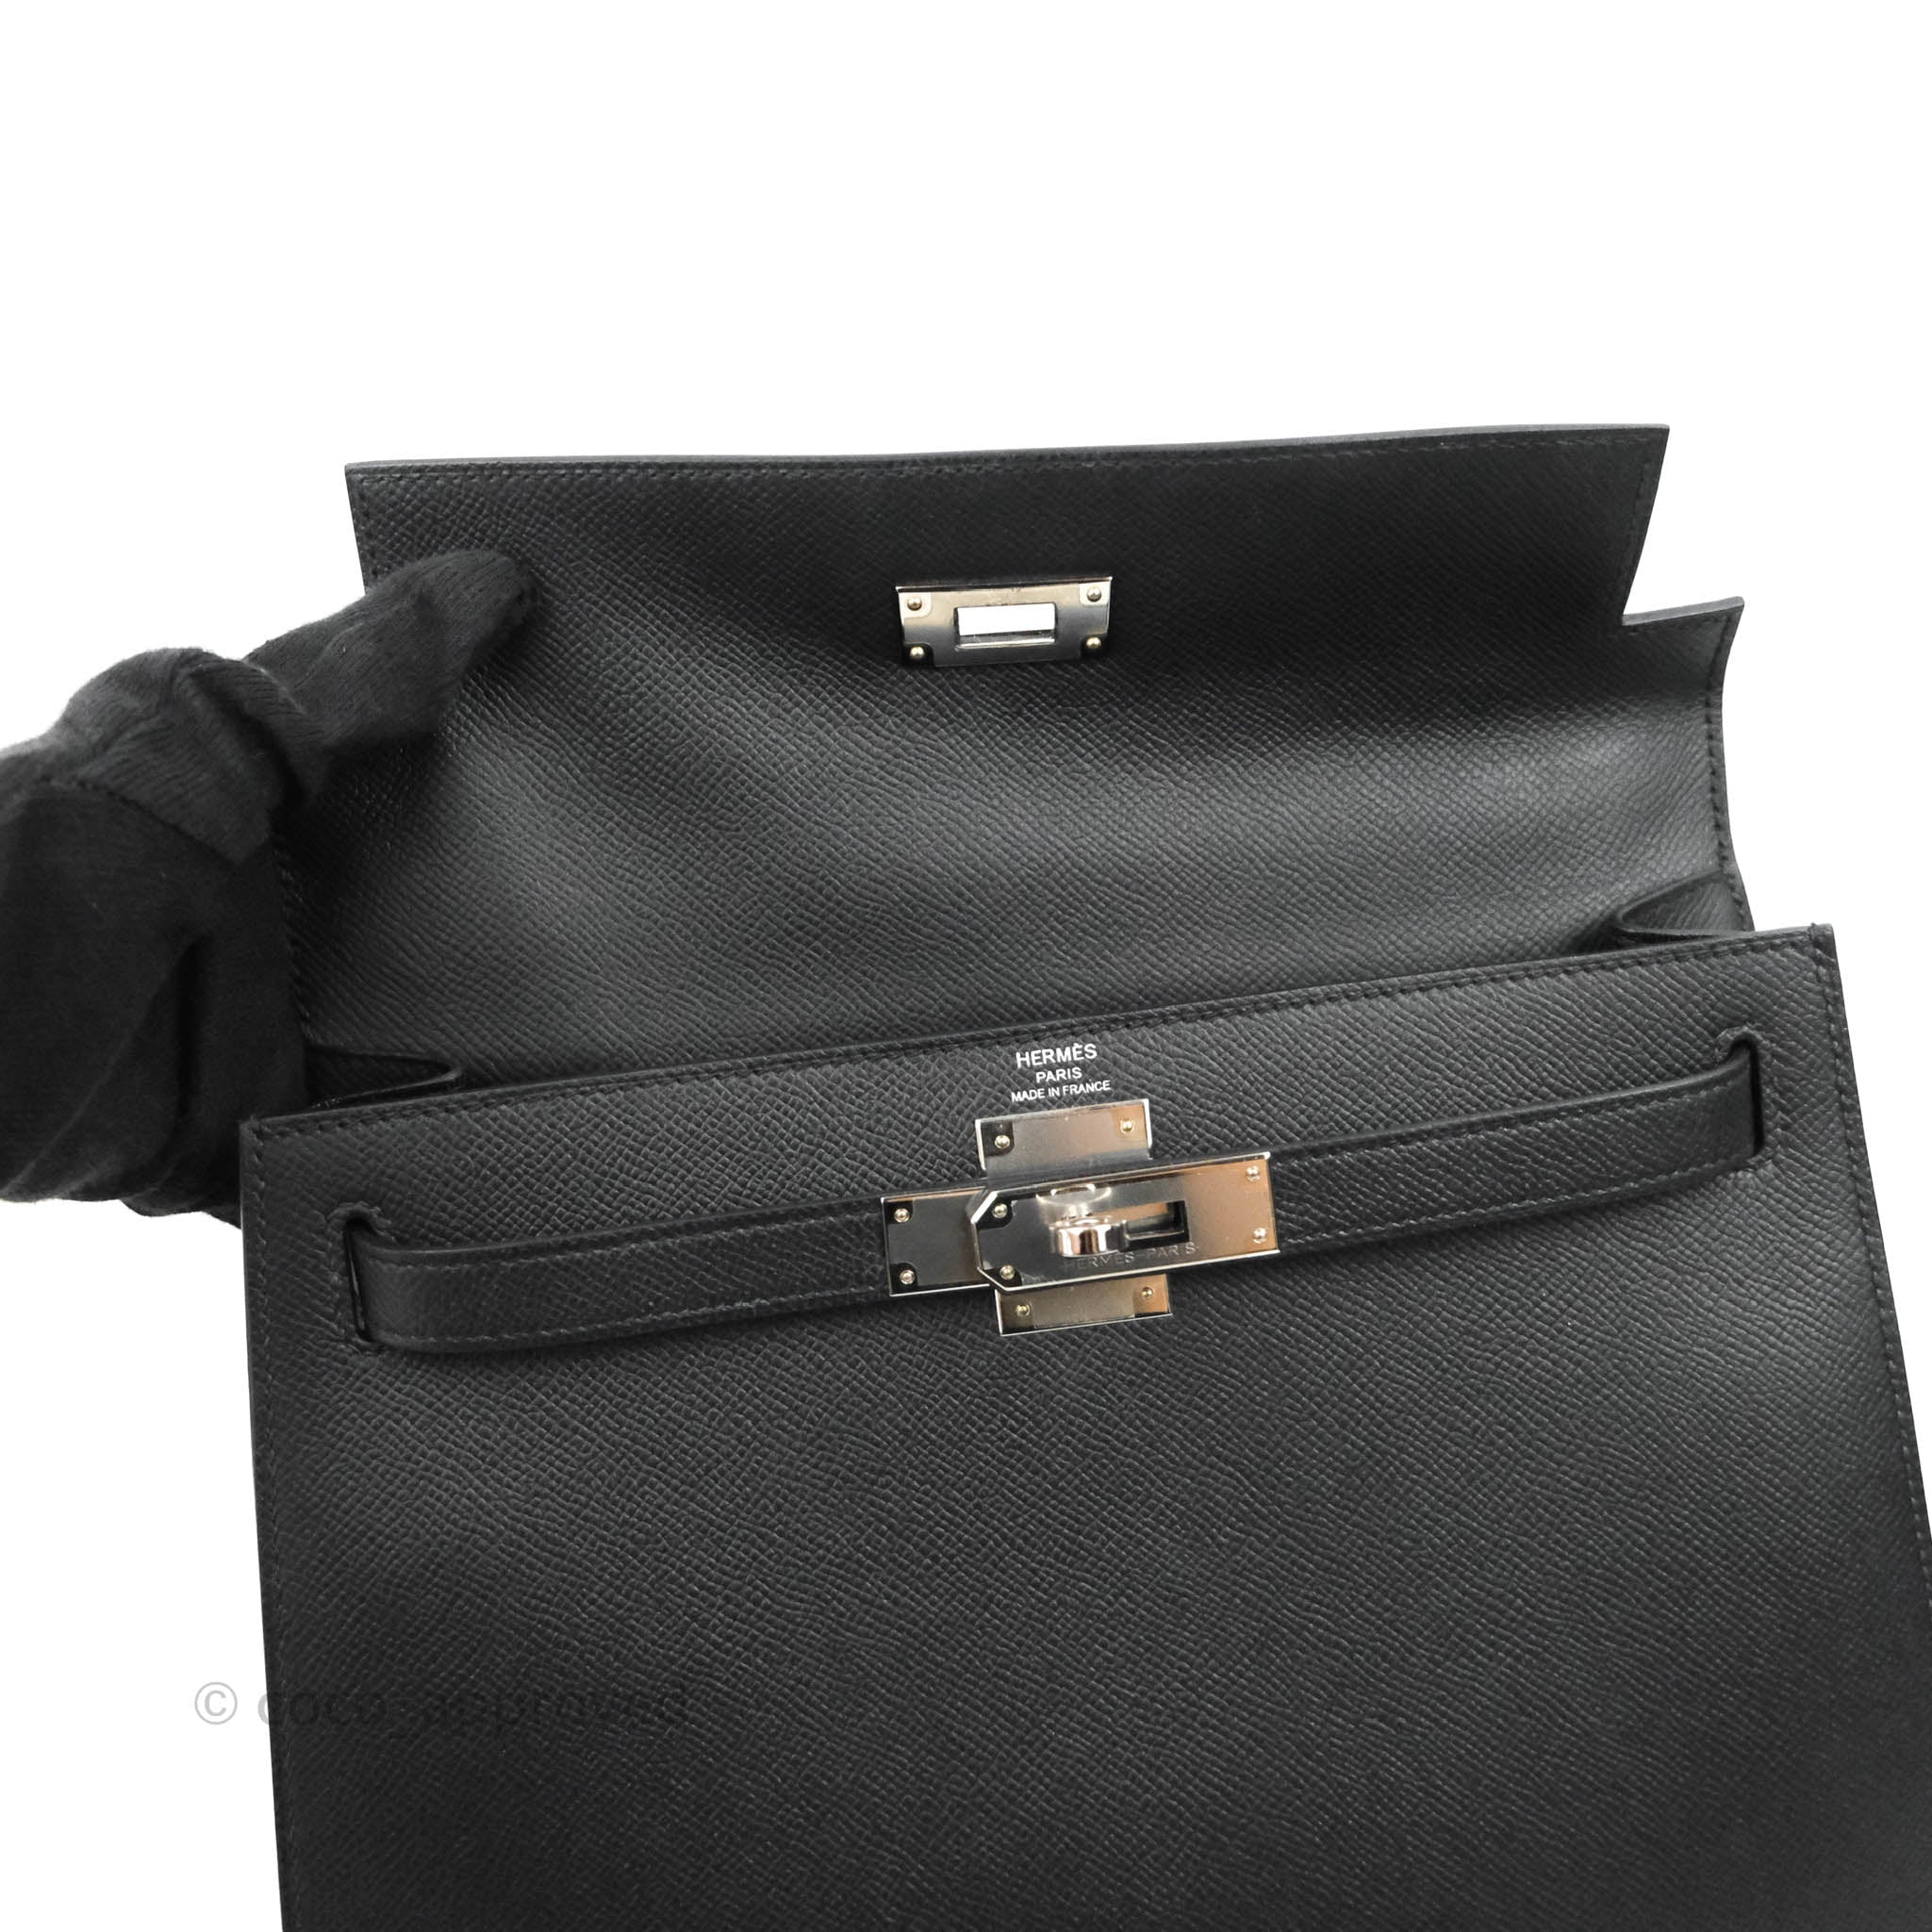 Hermès Kelly 28 Black Palladium hdw - Designer WishBags